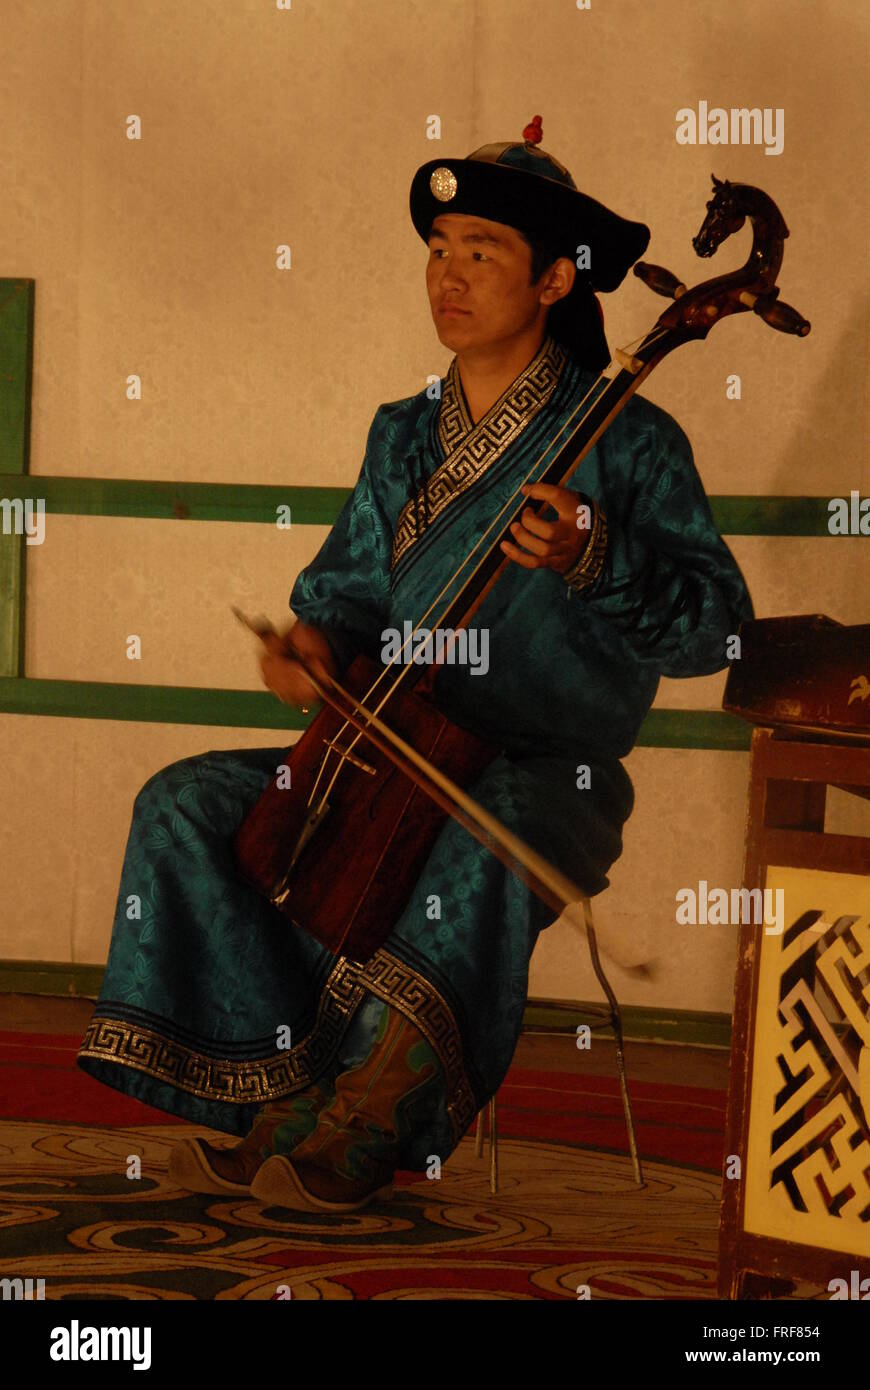 Mongolia -  09/08/2010  -  Mongolia / Ulan Bator / Ulan Bator  -  Horse fiddle player   -  Sandrine Huet / Le Pictorium Stock Photo